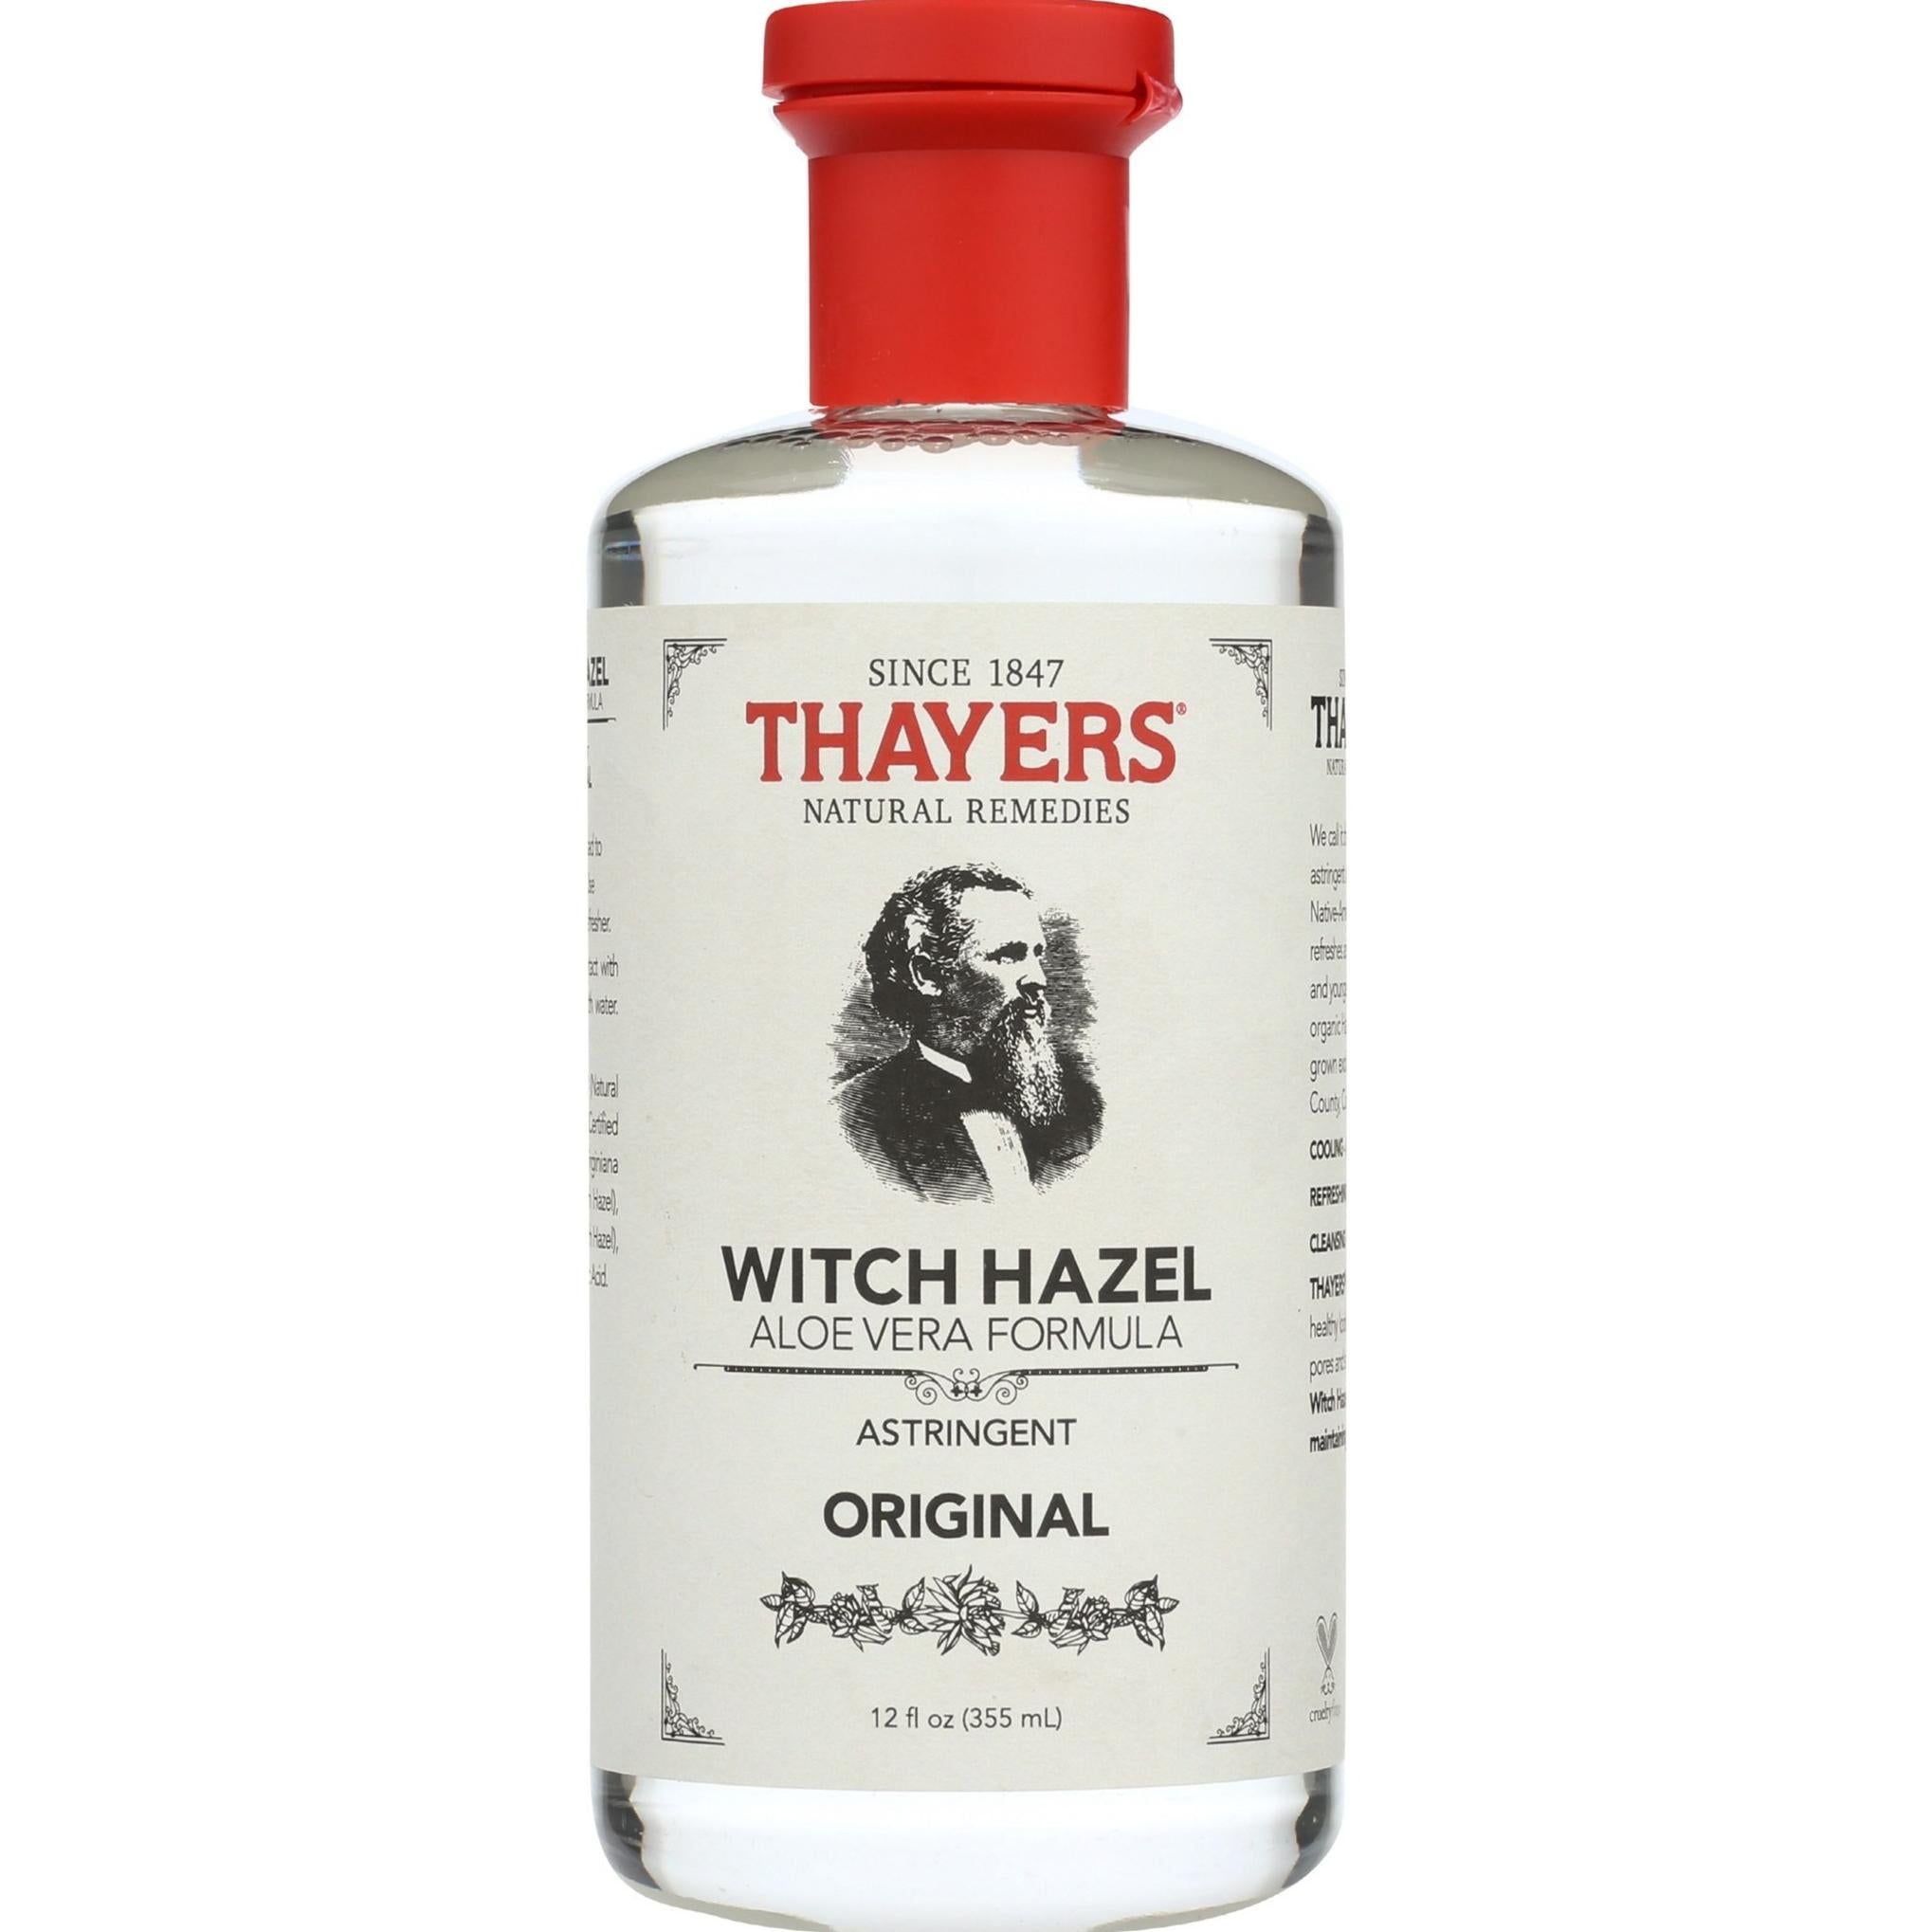 Thayers Witch Hazel Astringent Original